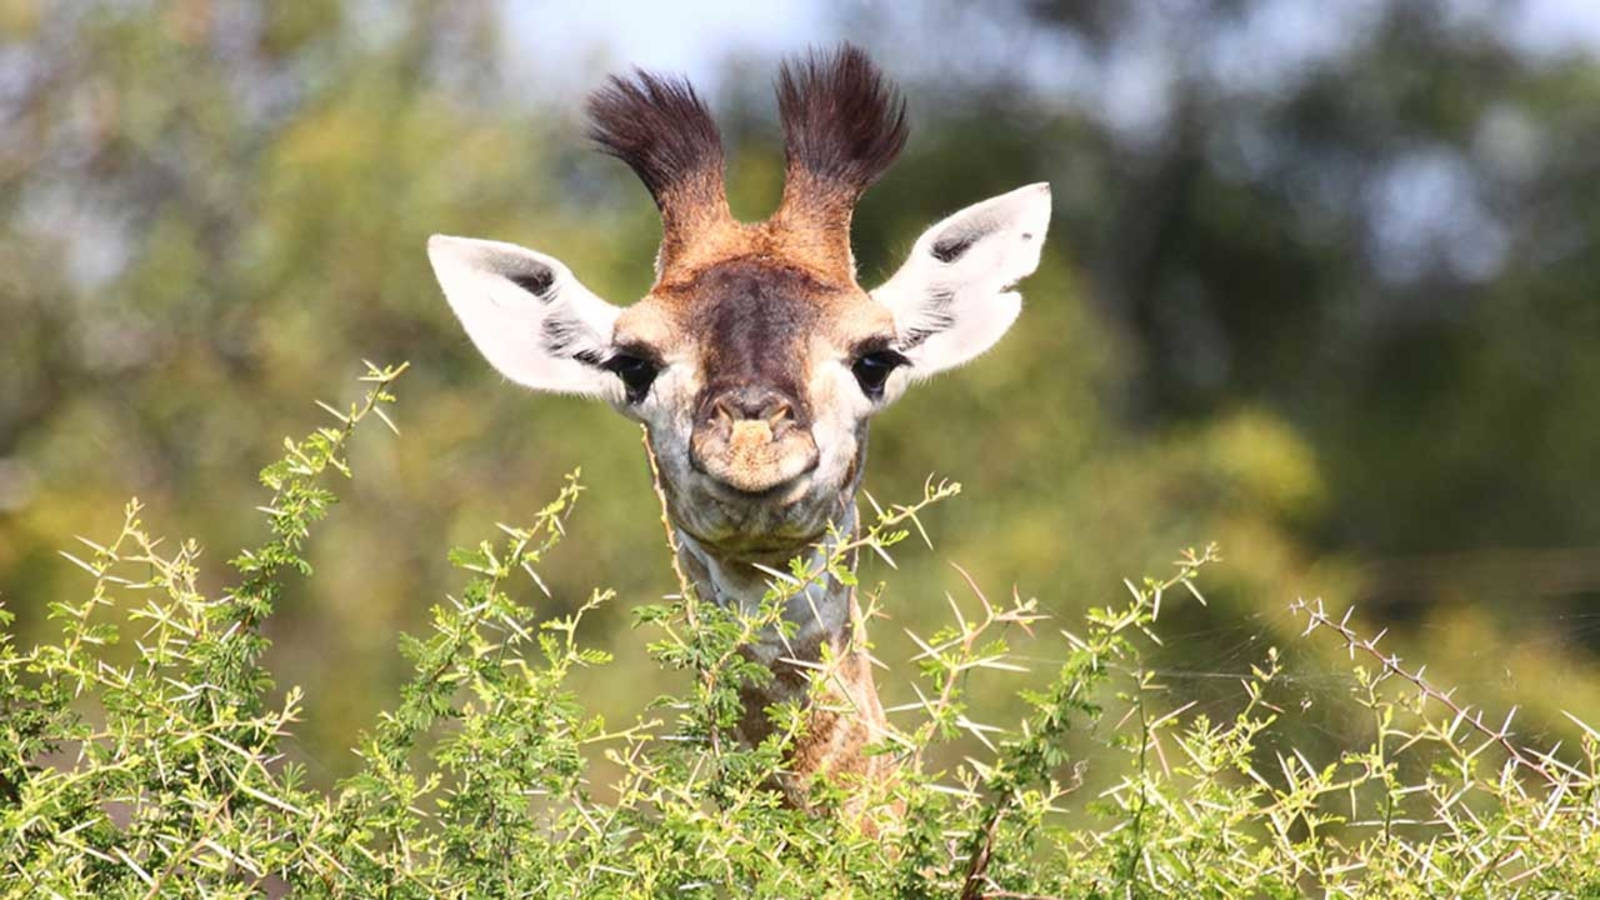 Innocent Delight - A Baby Giraffe With Bushy Horns Background